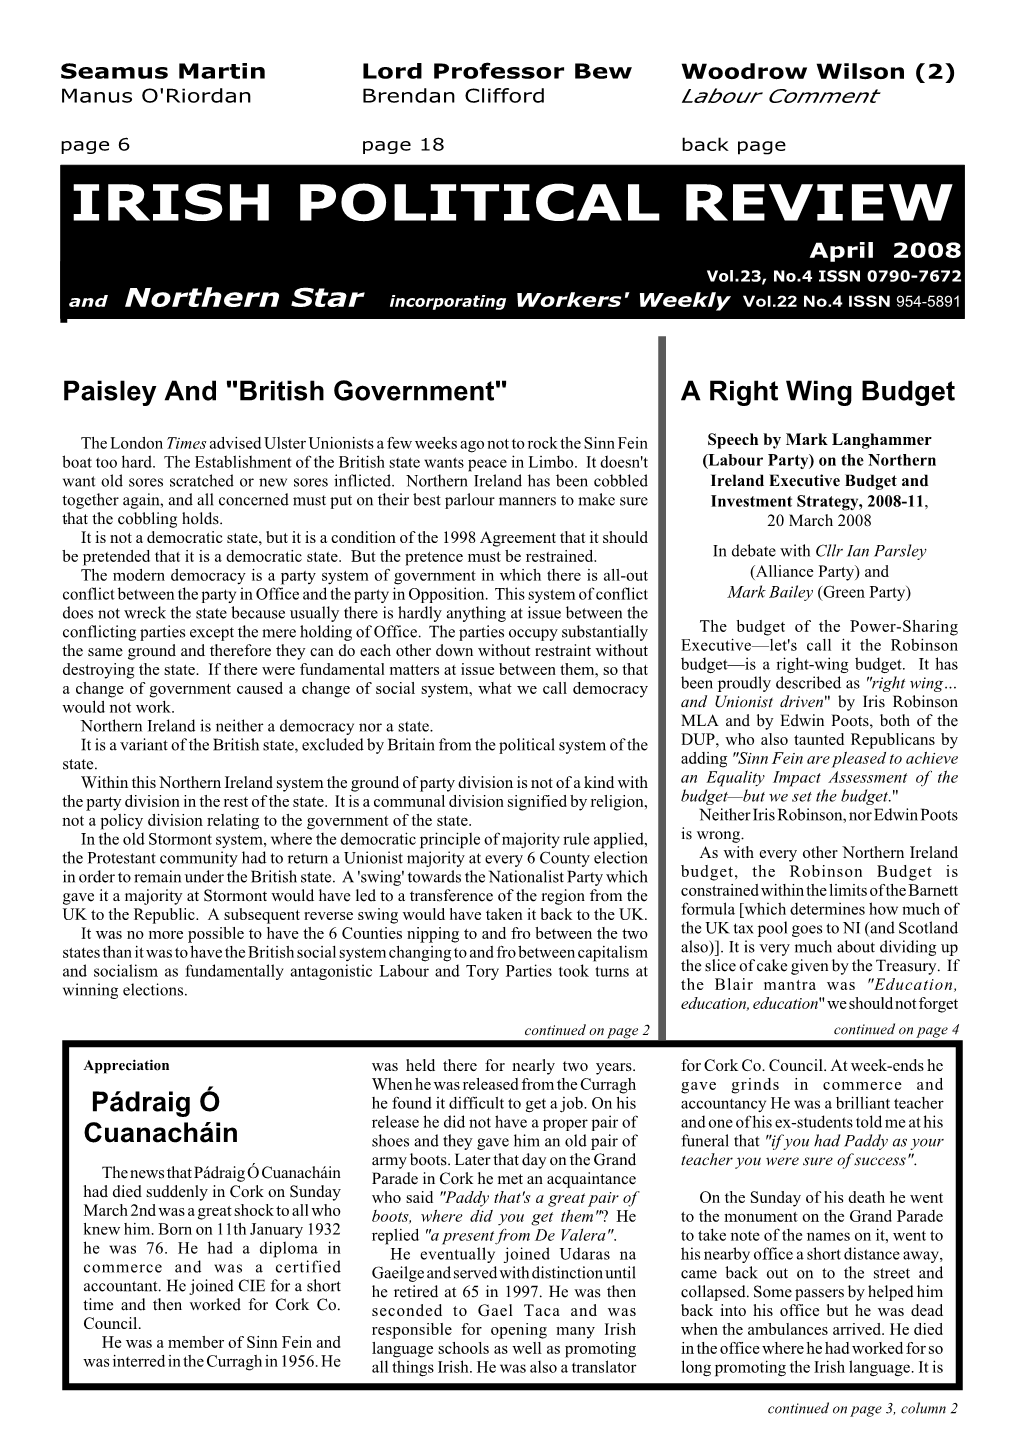 Irish Political Review, April 2008